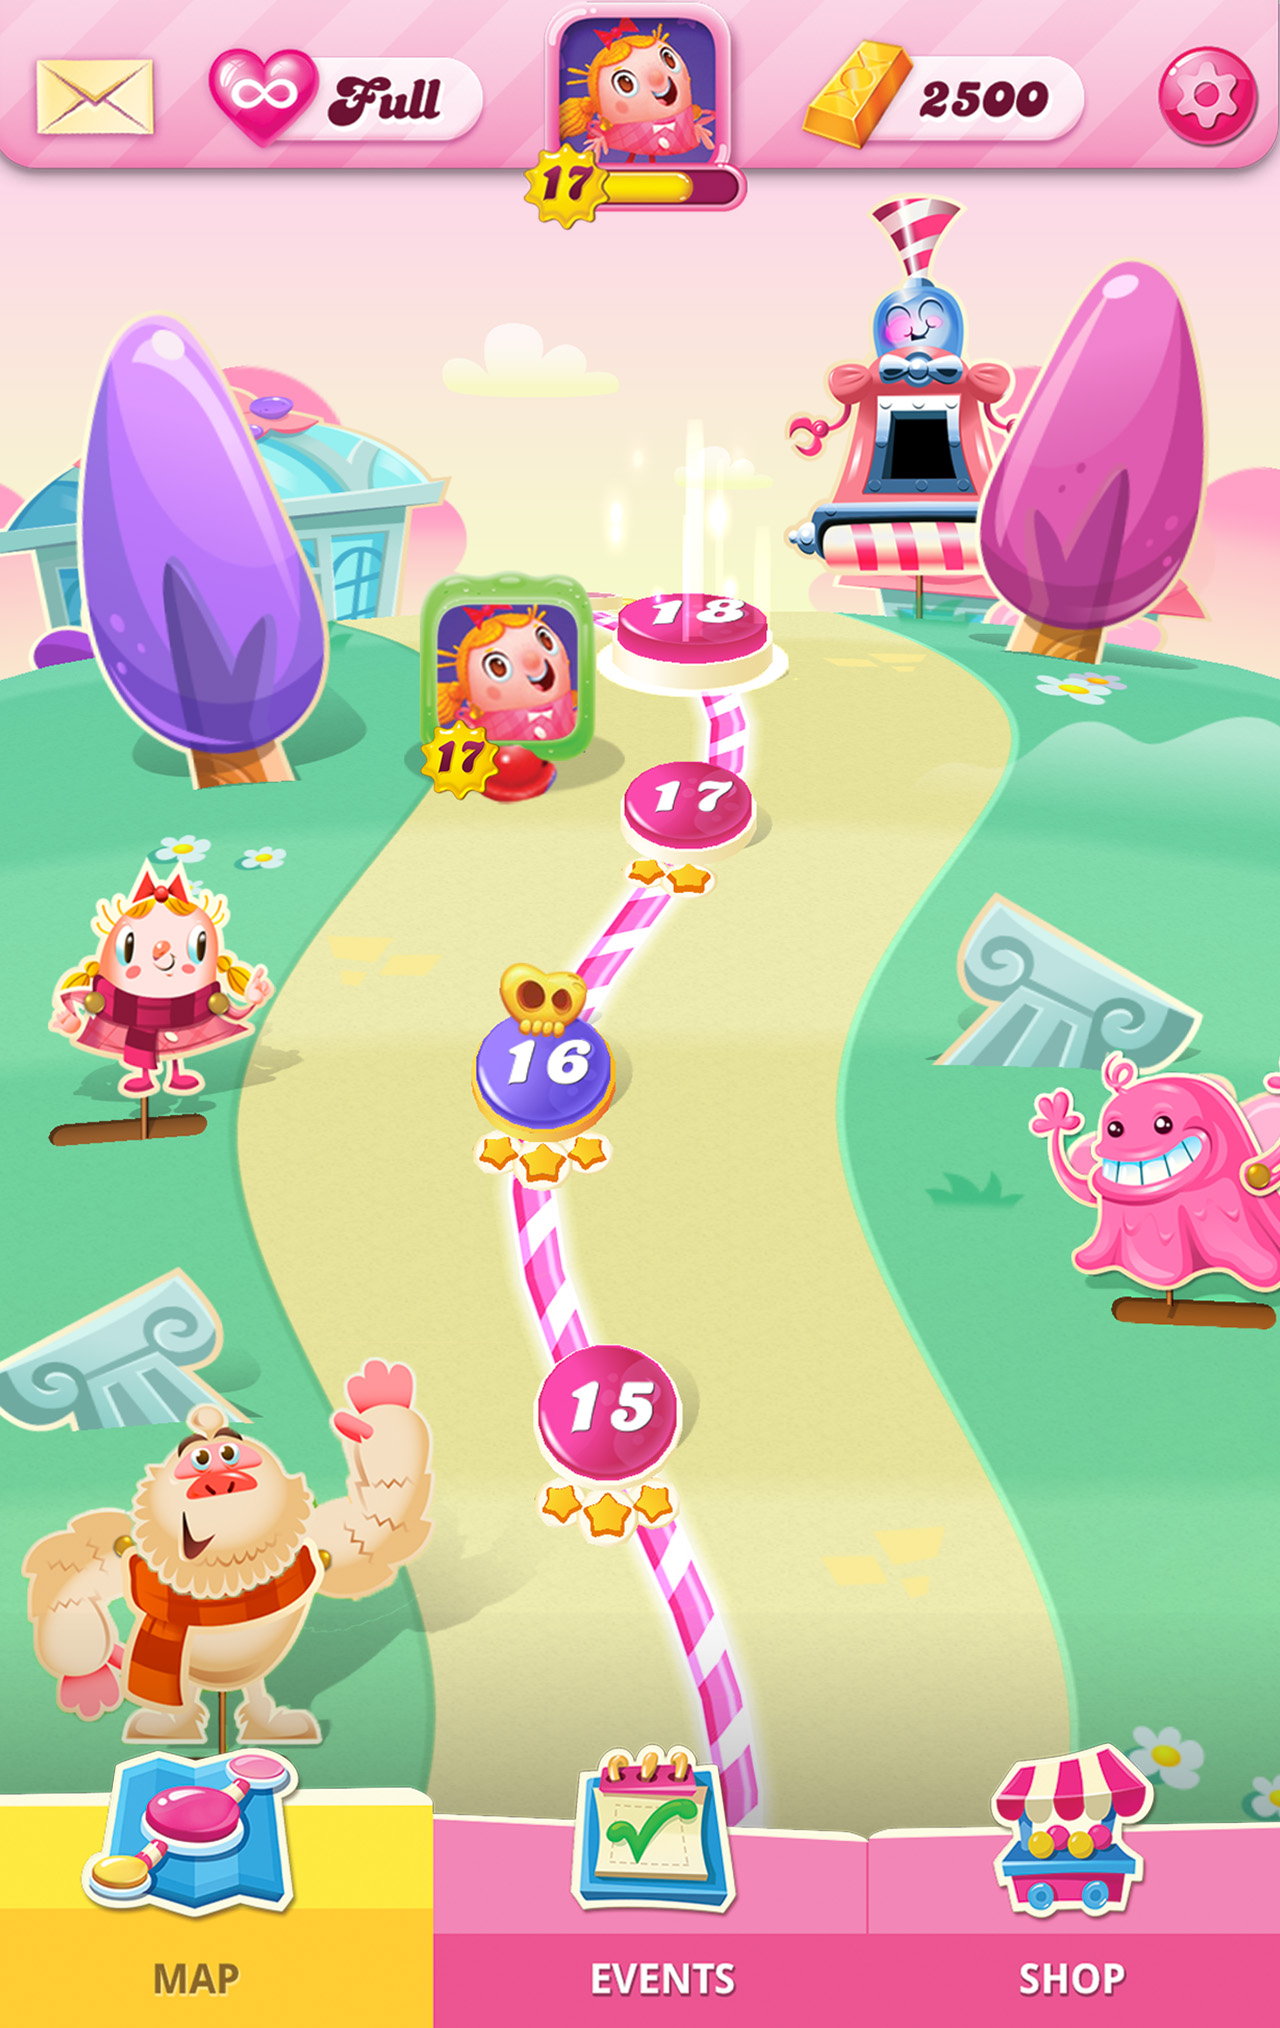 Download & Play Candy Crush Saga on PC & Mac (Emulator)